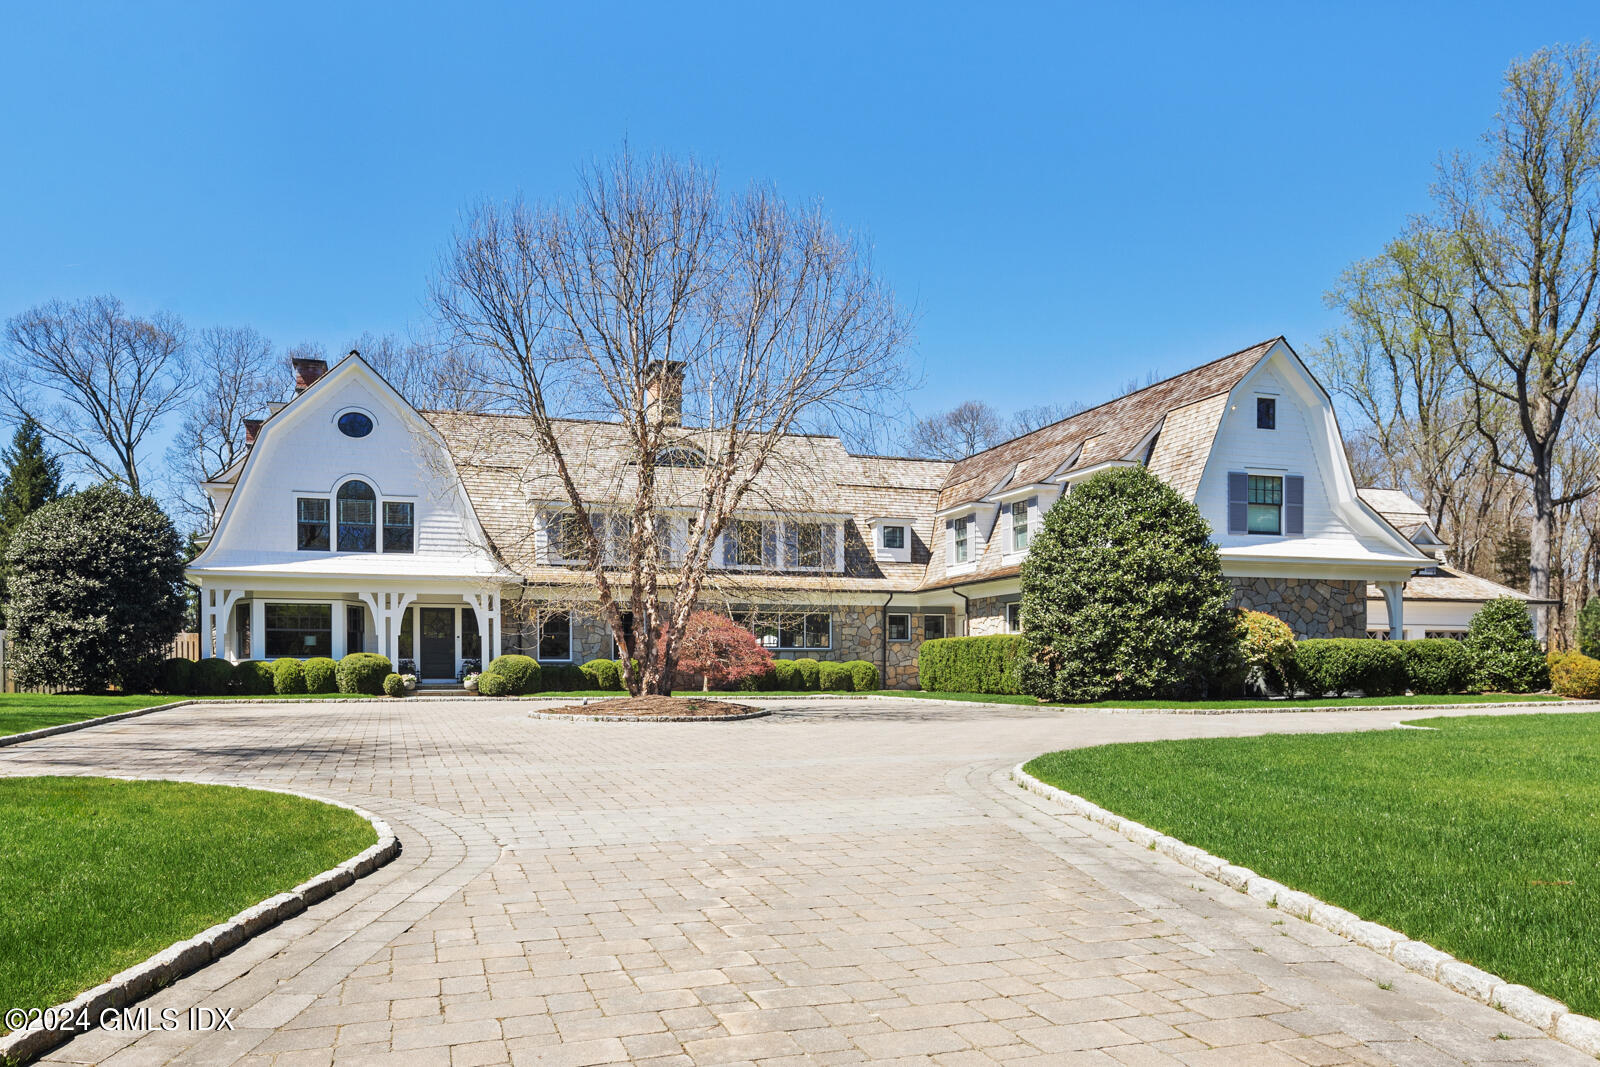 Rental Property at 4 Fraser Lane, Westport, Connecticut - Bedrooms: 7 
Bathrooms: 9  - $55,000 MO.